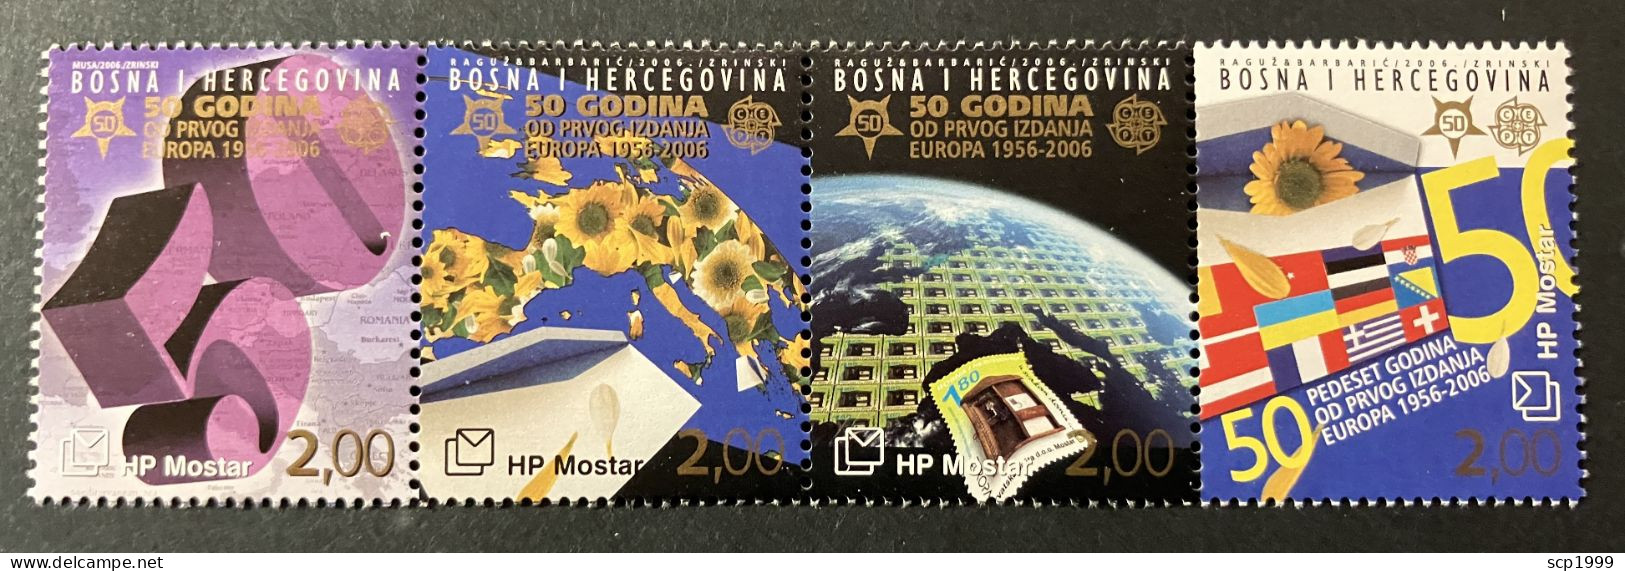 Bosnia And Herzegovina 2006 - Europa 50 Years Stamps Set MNH - Bosnia And Herzegovina